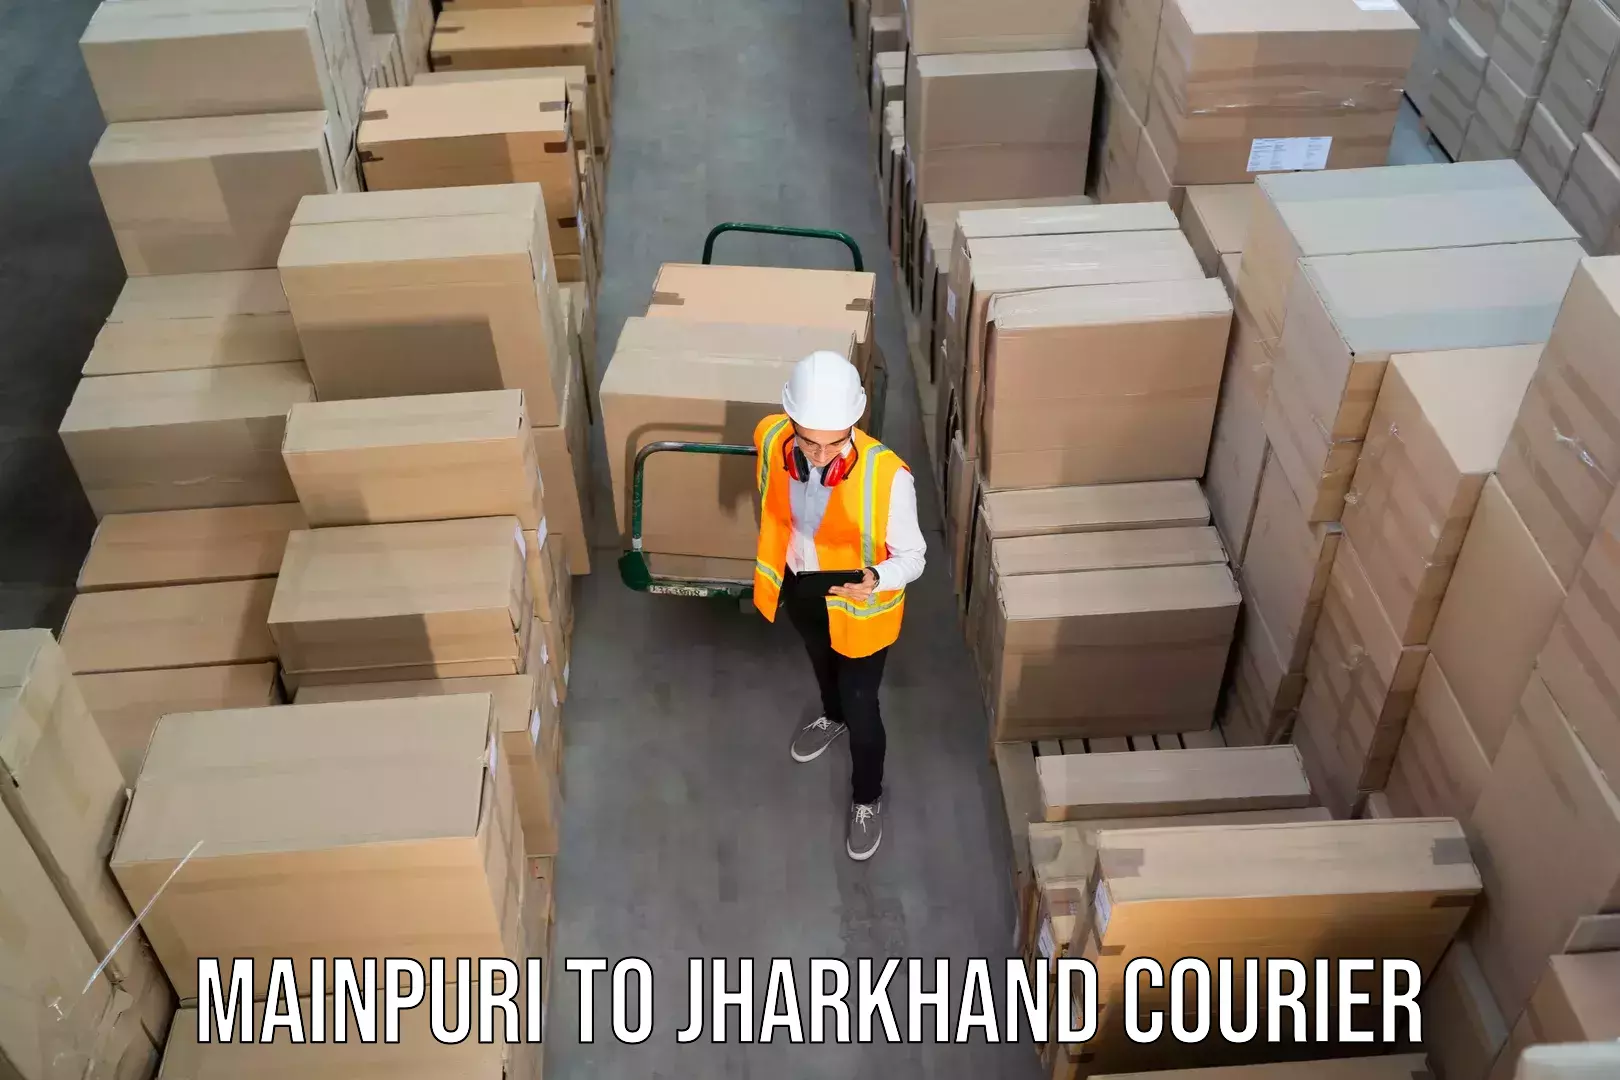 Express delivery network Mainpuri to Bundu